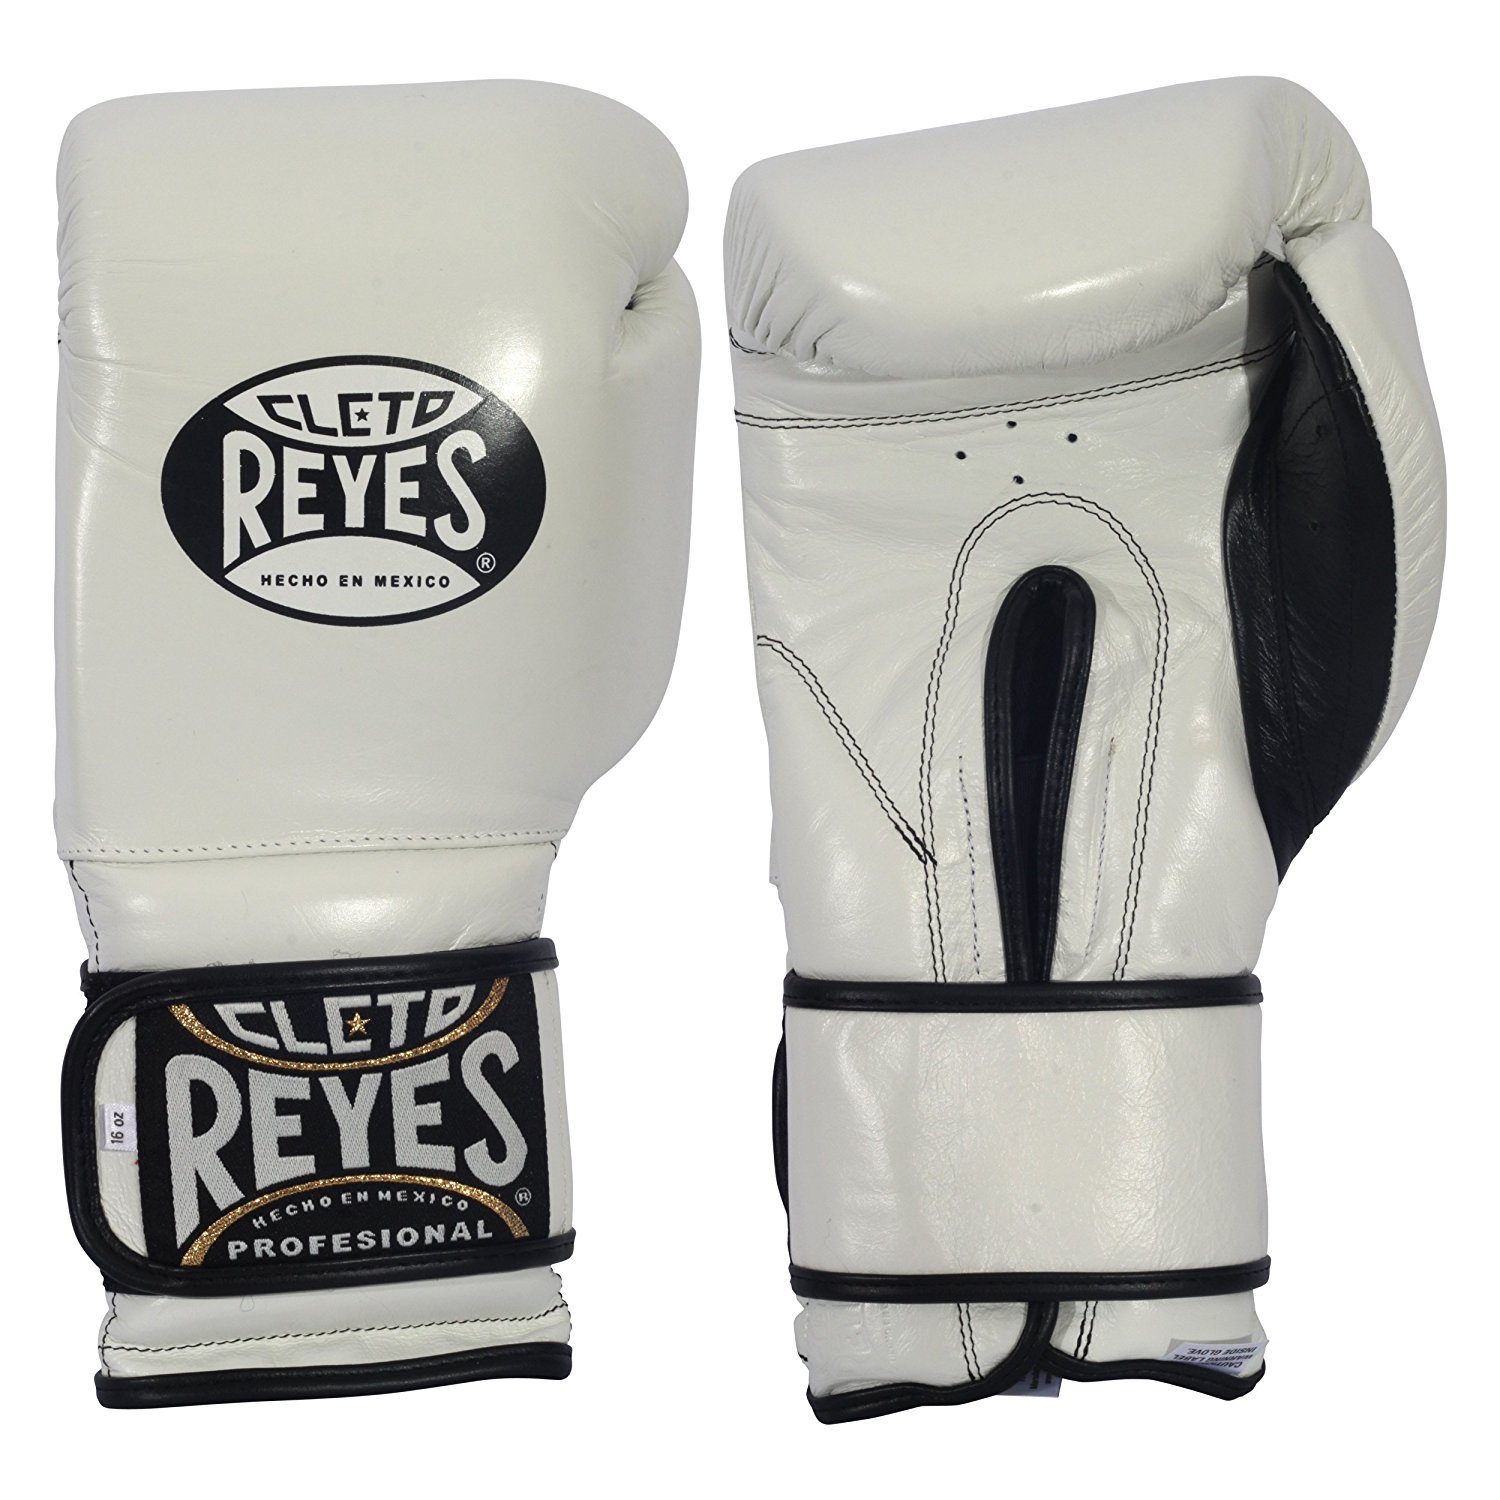 best boxing glove brands